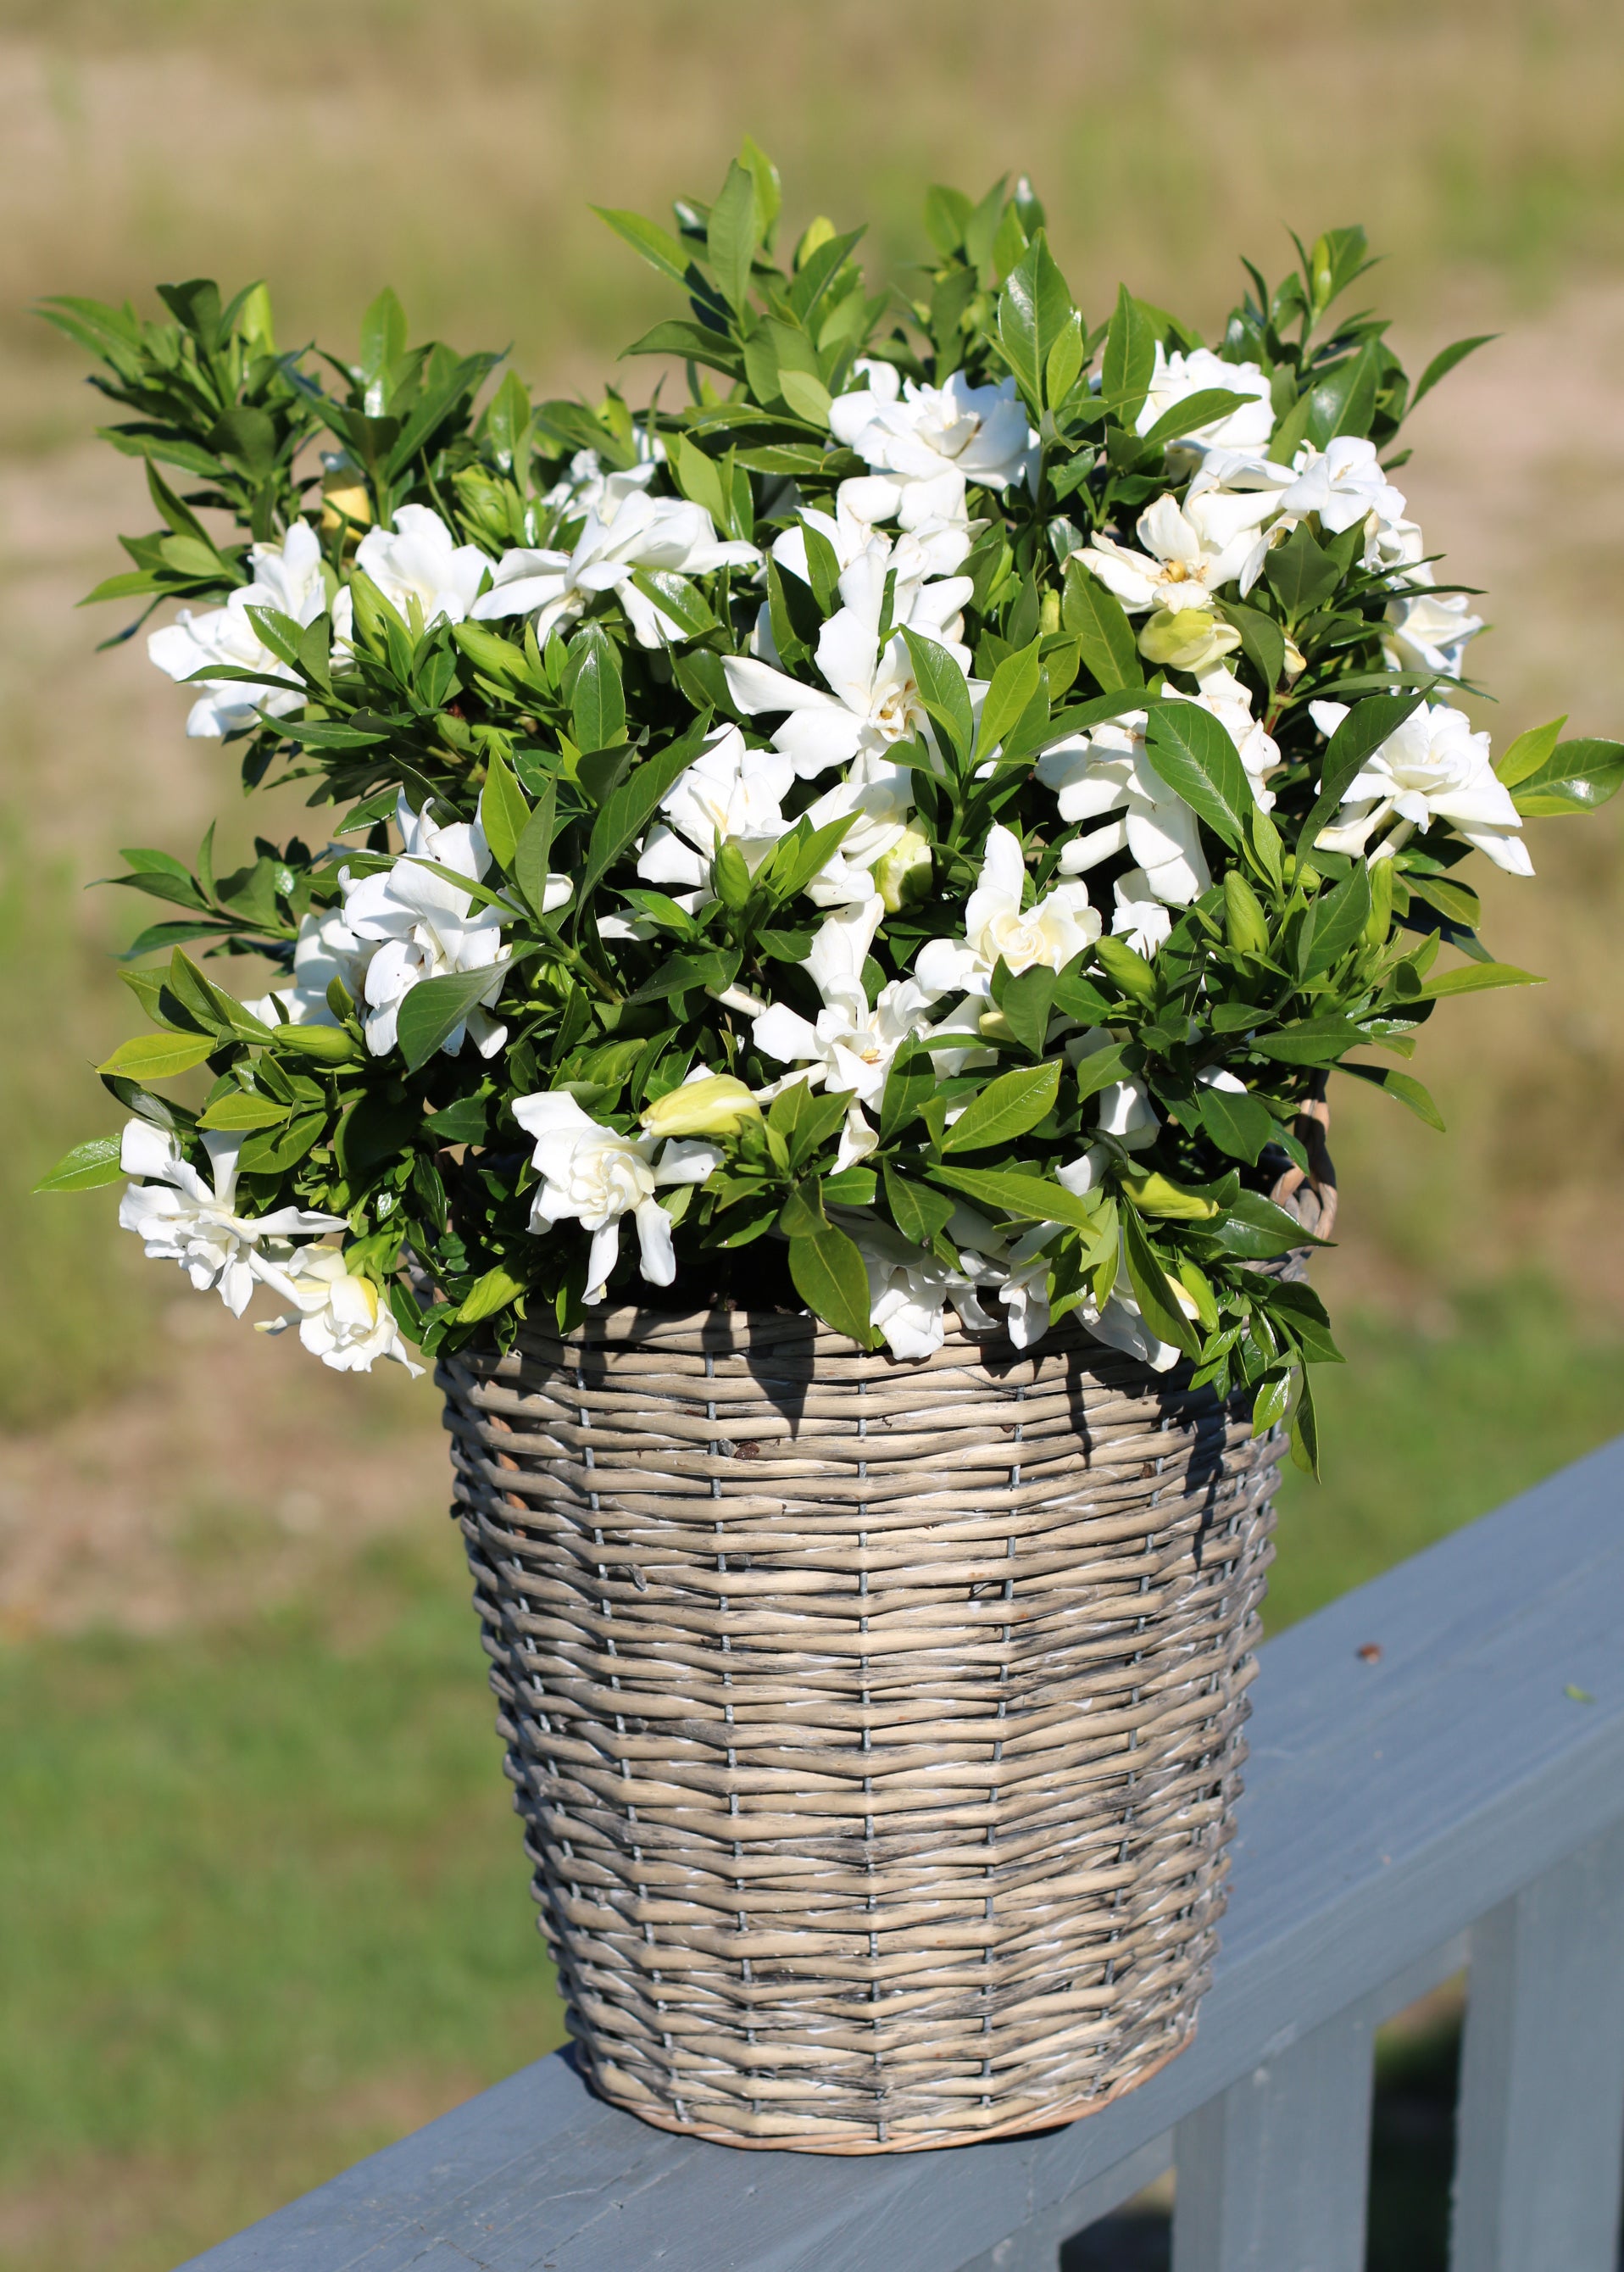 Celestial Star™ White Gardenia Evergreen Shrub - 2 Gallon